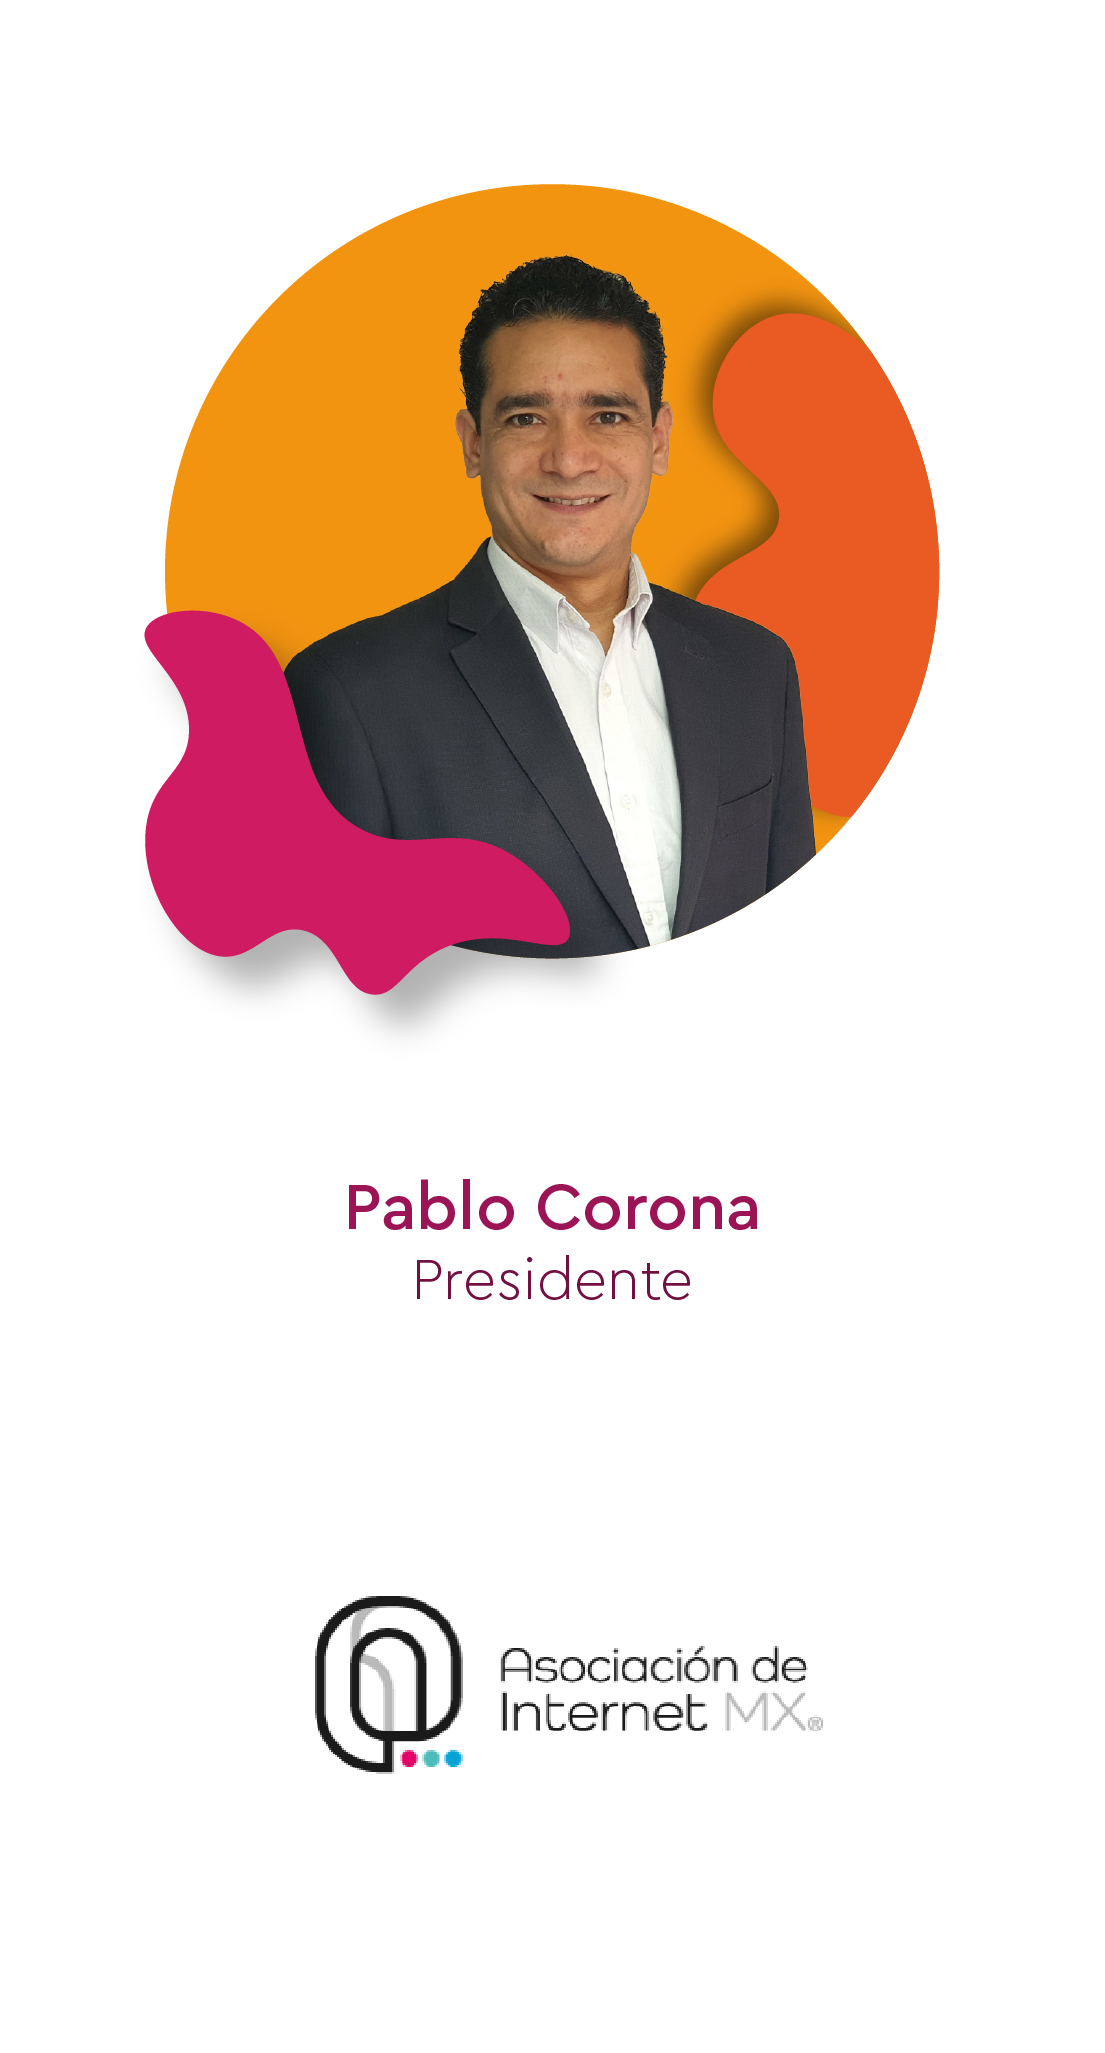 Pablo Corona